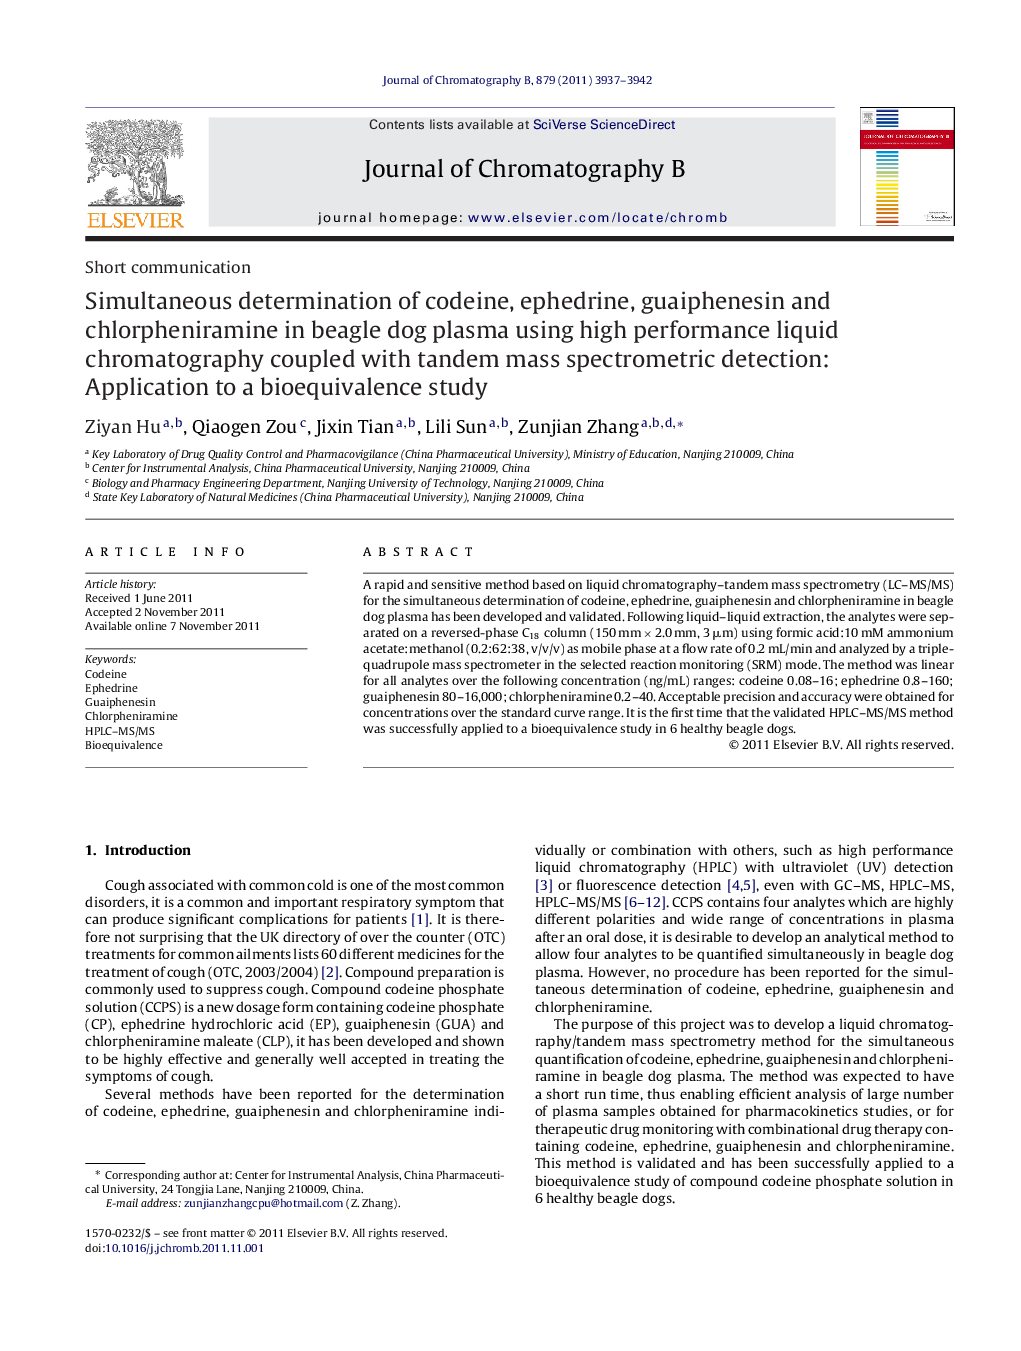 Simultaneous determination of codeine, ephedrine, guaiphenesin and chlorpheniramine in beagle dog plasma using high performance liquid chromatography coupled with tandem mass spectrometric detection: Application to a bioequivalence study